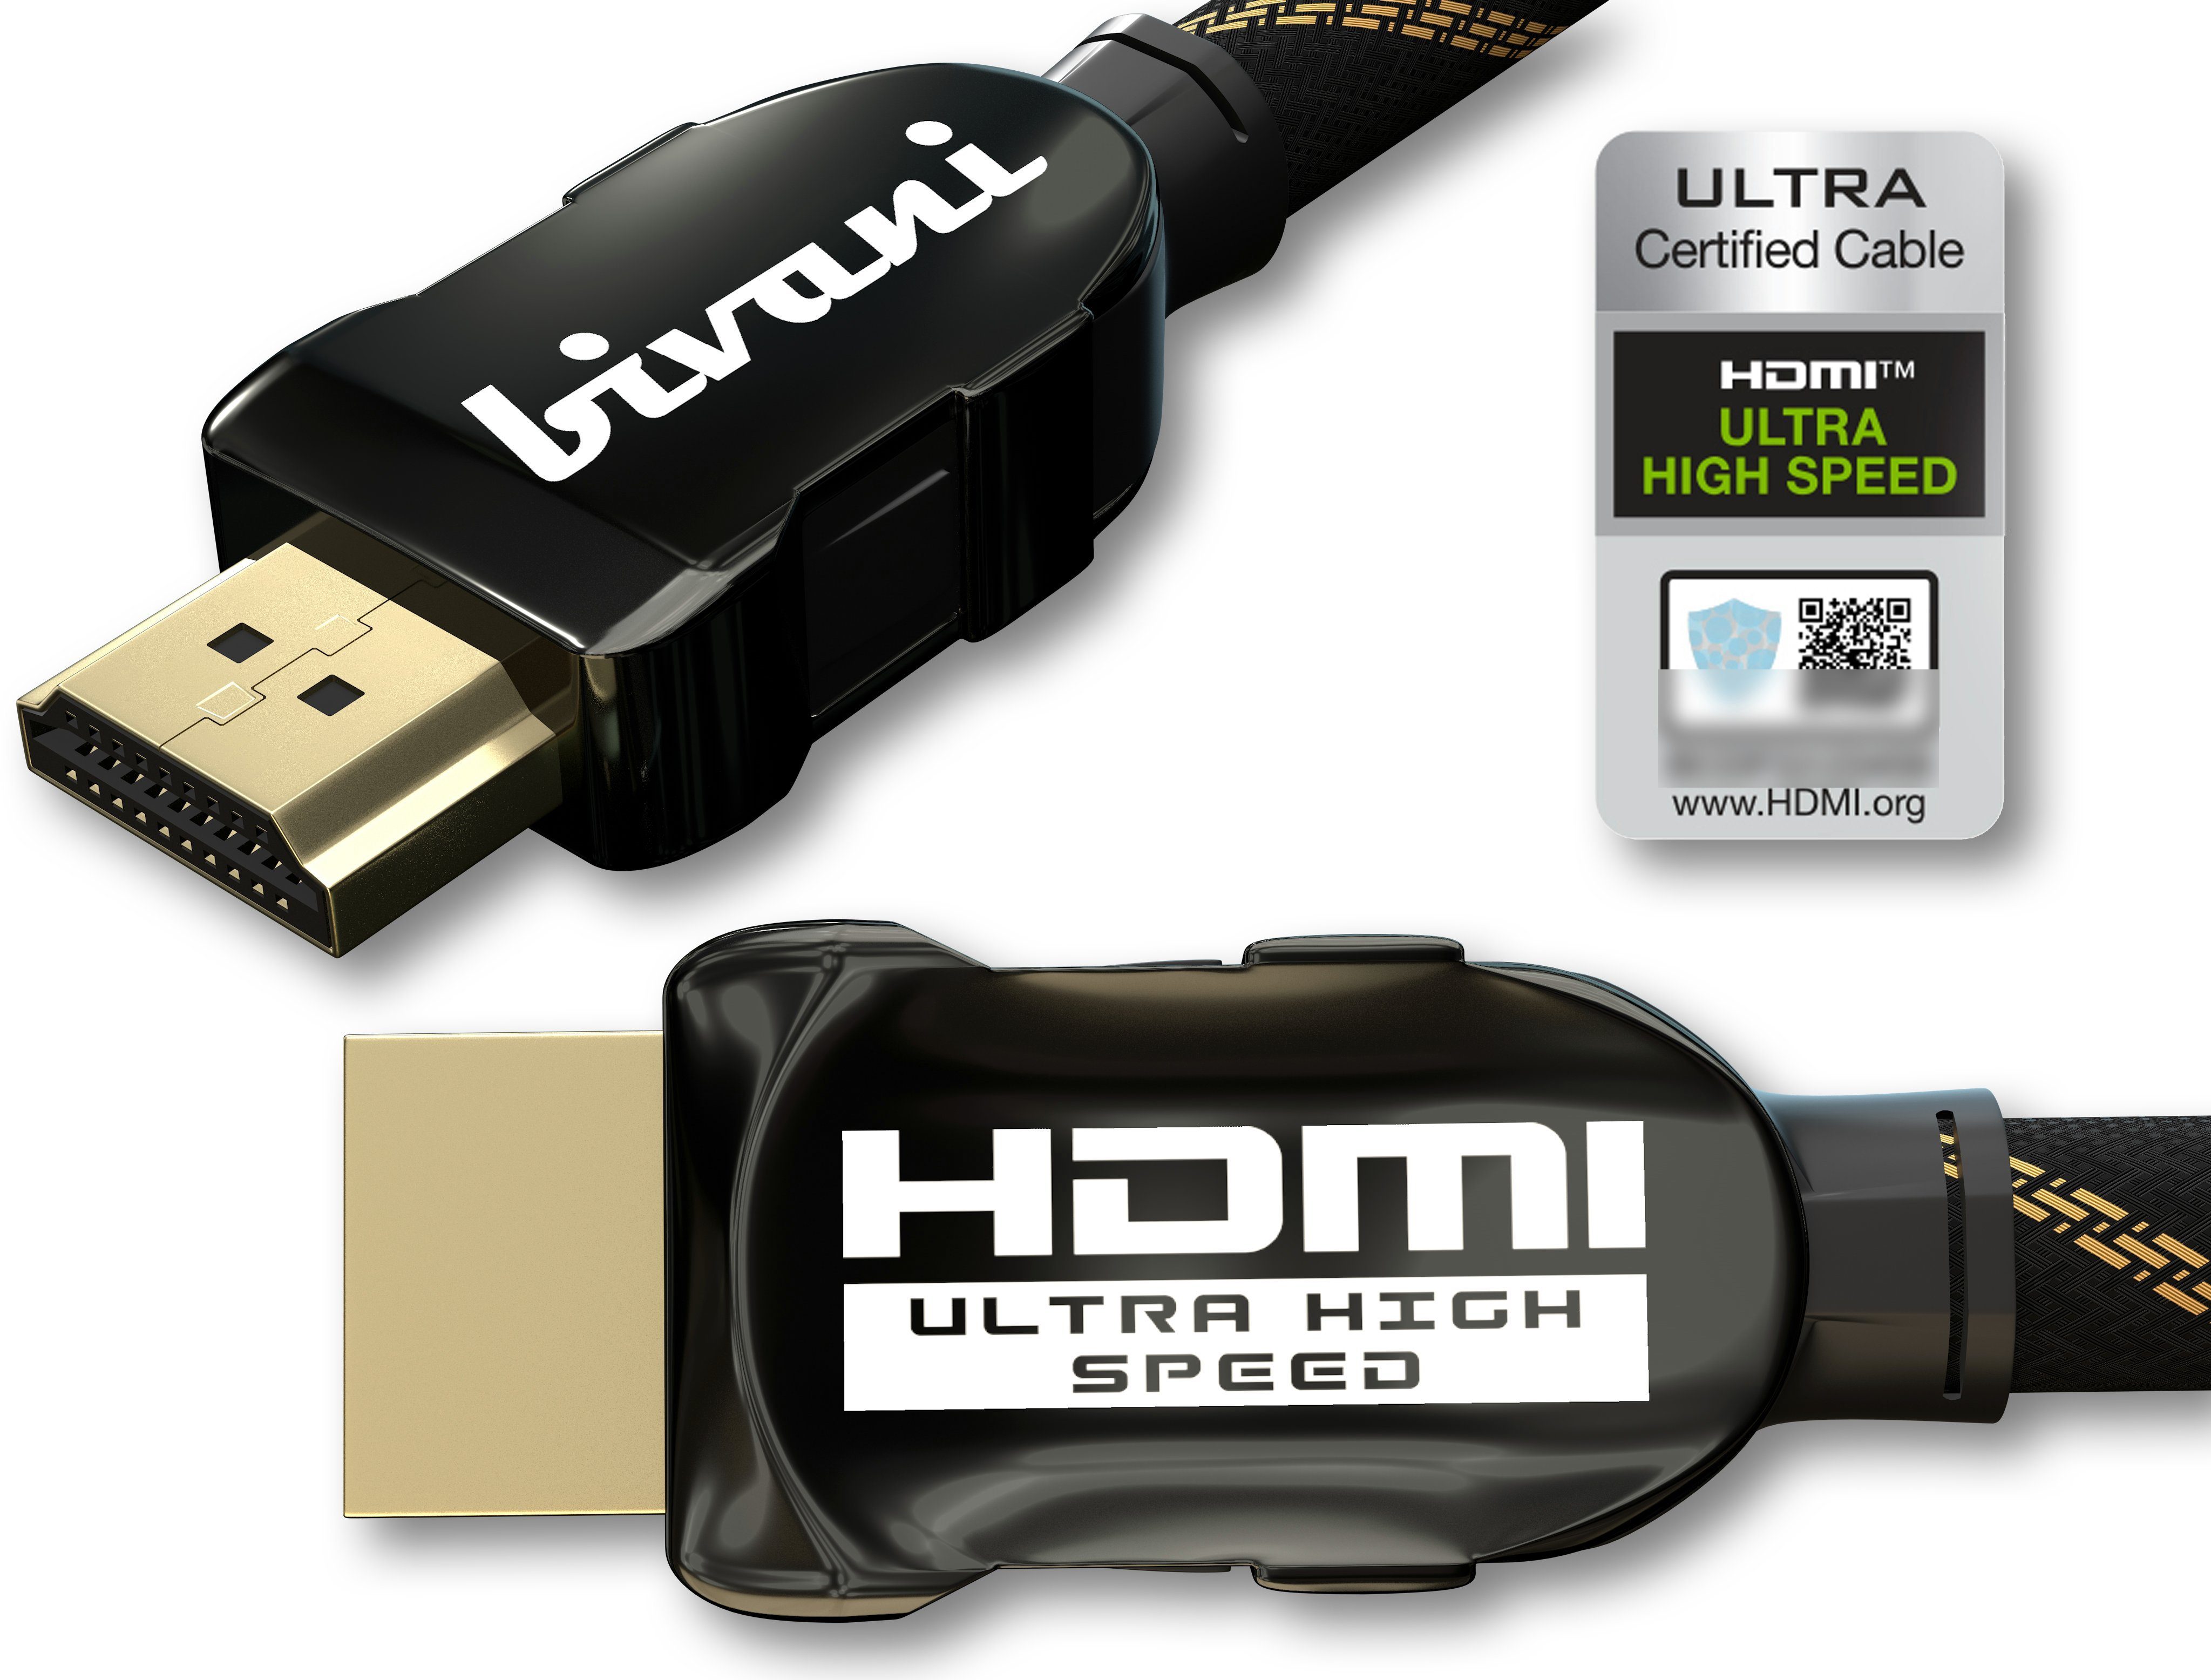 HDTV 7680 x 4320 Präzisionsstecker 5m 8K HDMI Kabel 2.1-8K@60Hz 4K @ 120Hz DSC 3D HDR UHD II kompatibel zu PC TV PS4 PS5 Xbox HDMI 2.1 2.0a 2.0b ARC Highspeed HDMI-Kabel Ethernet 